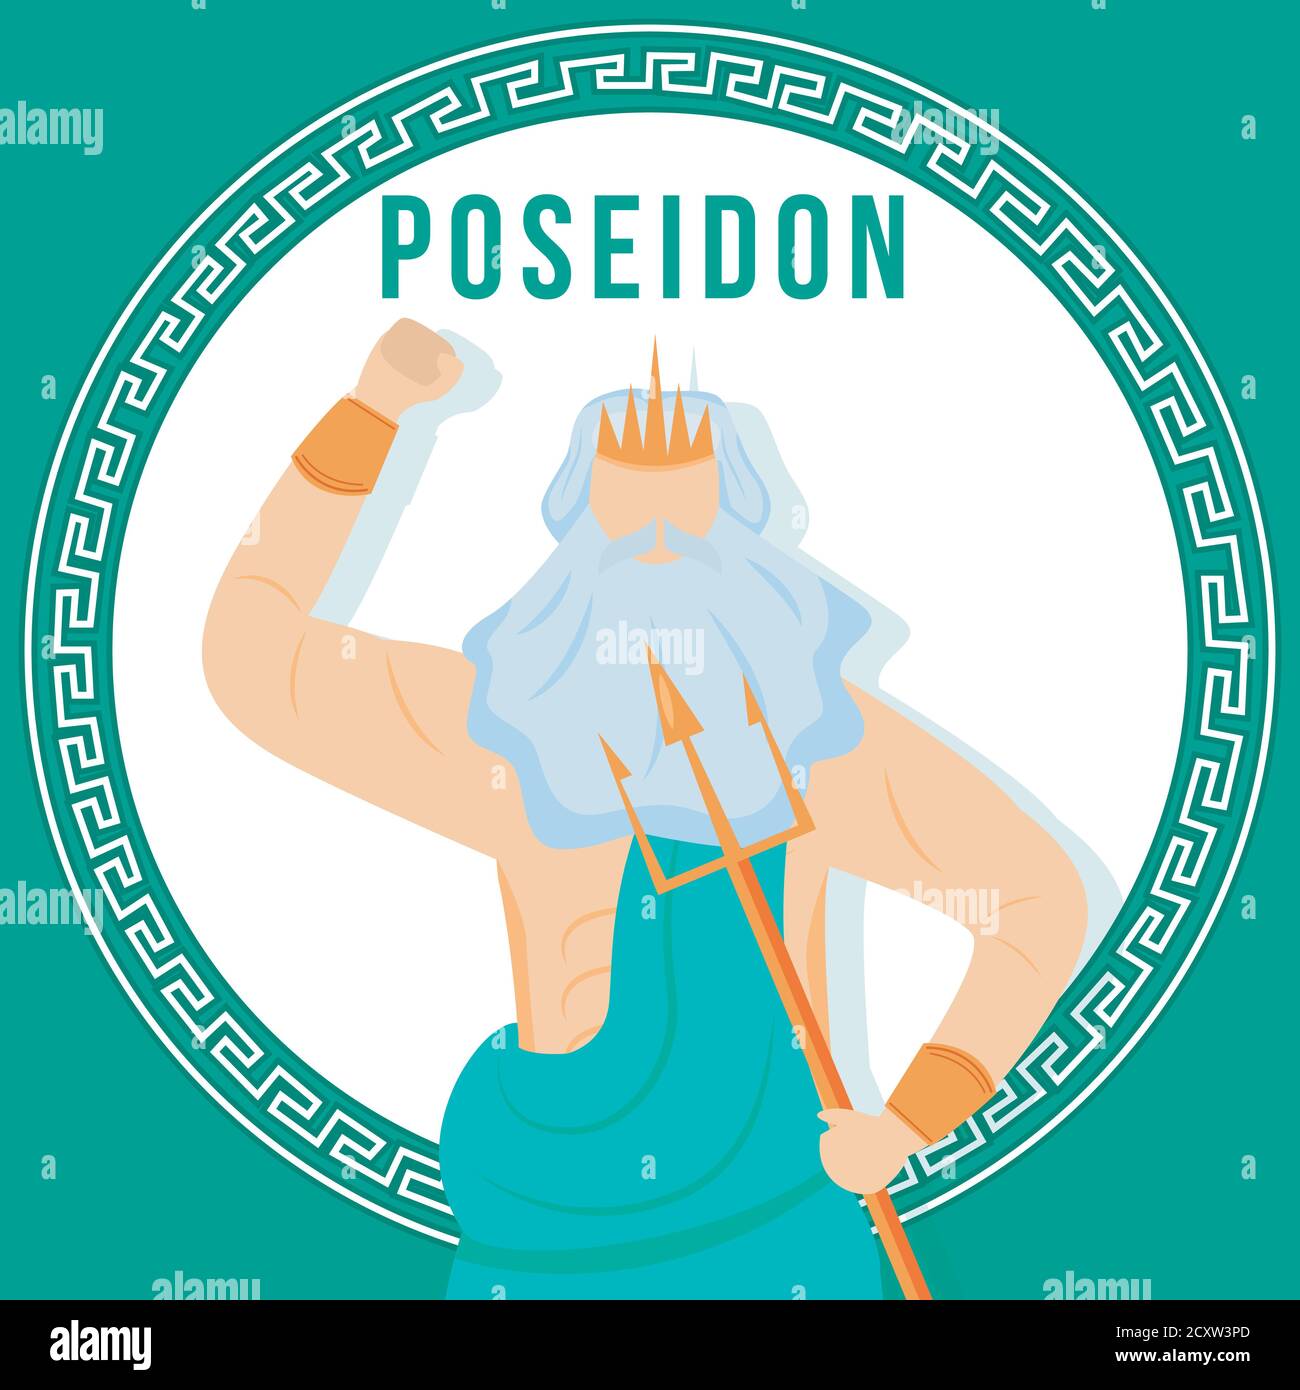 Poseidon turquesa social media post mokup Ilustración del Vector